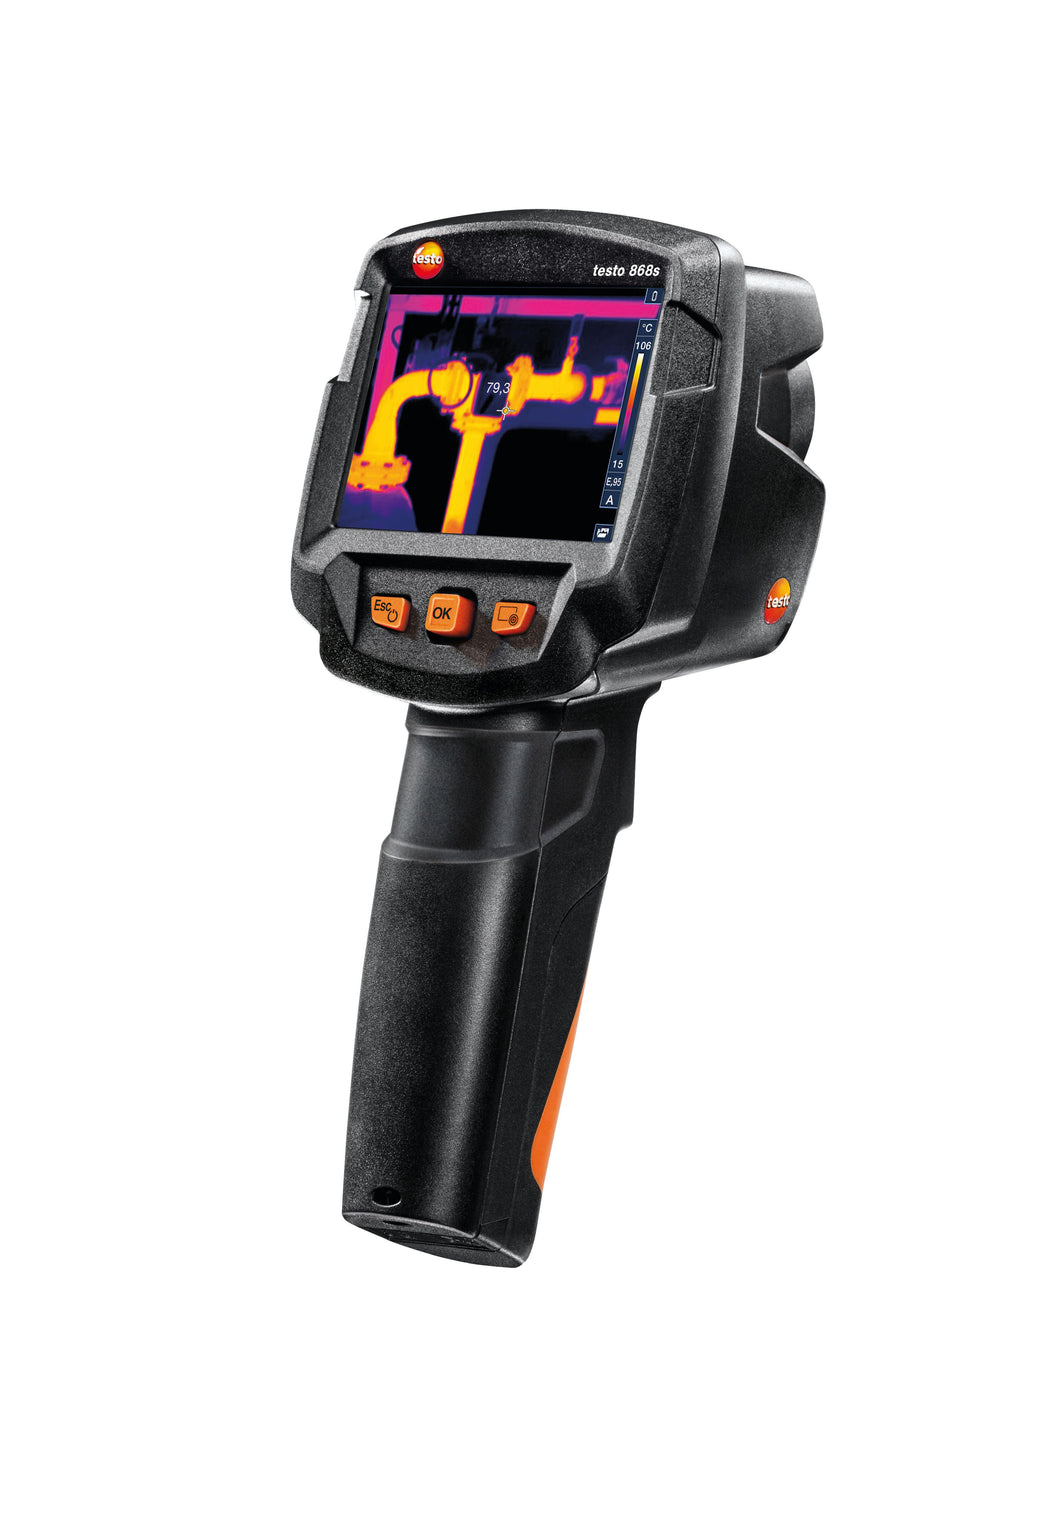 testo 868s- The new range of thermal imaging cameras! 0560 8684 Thermal Imaging Camera